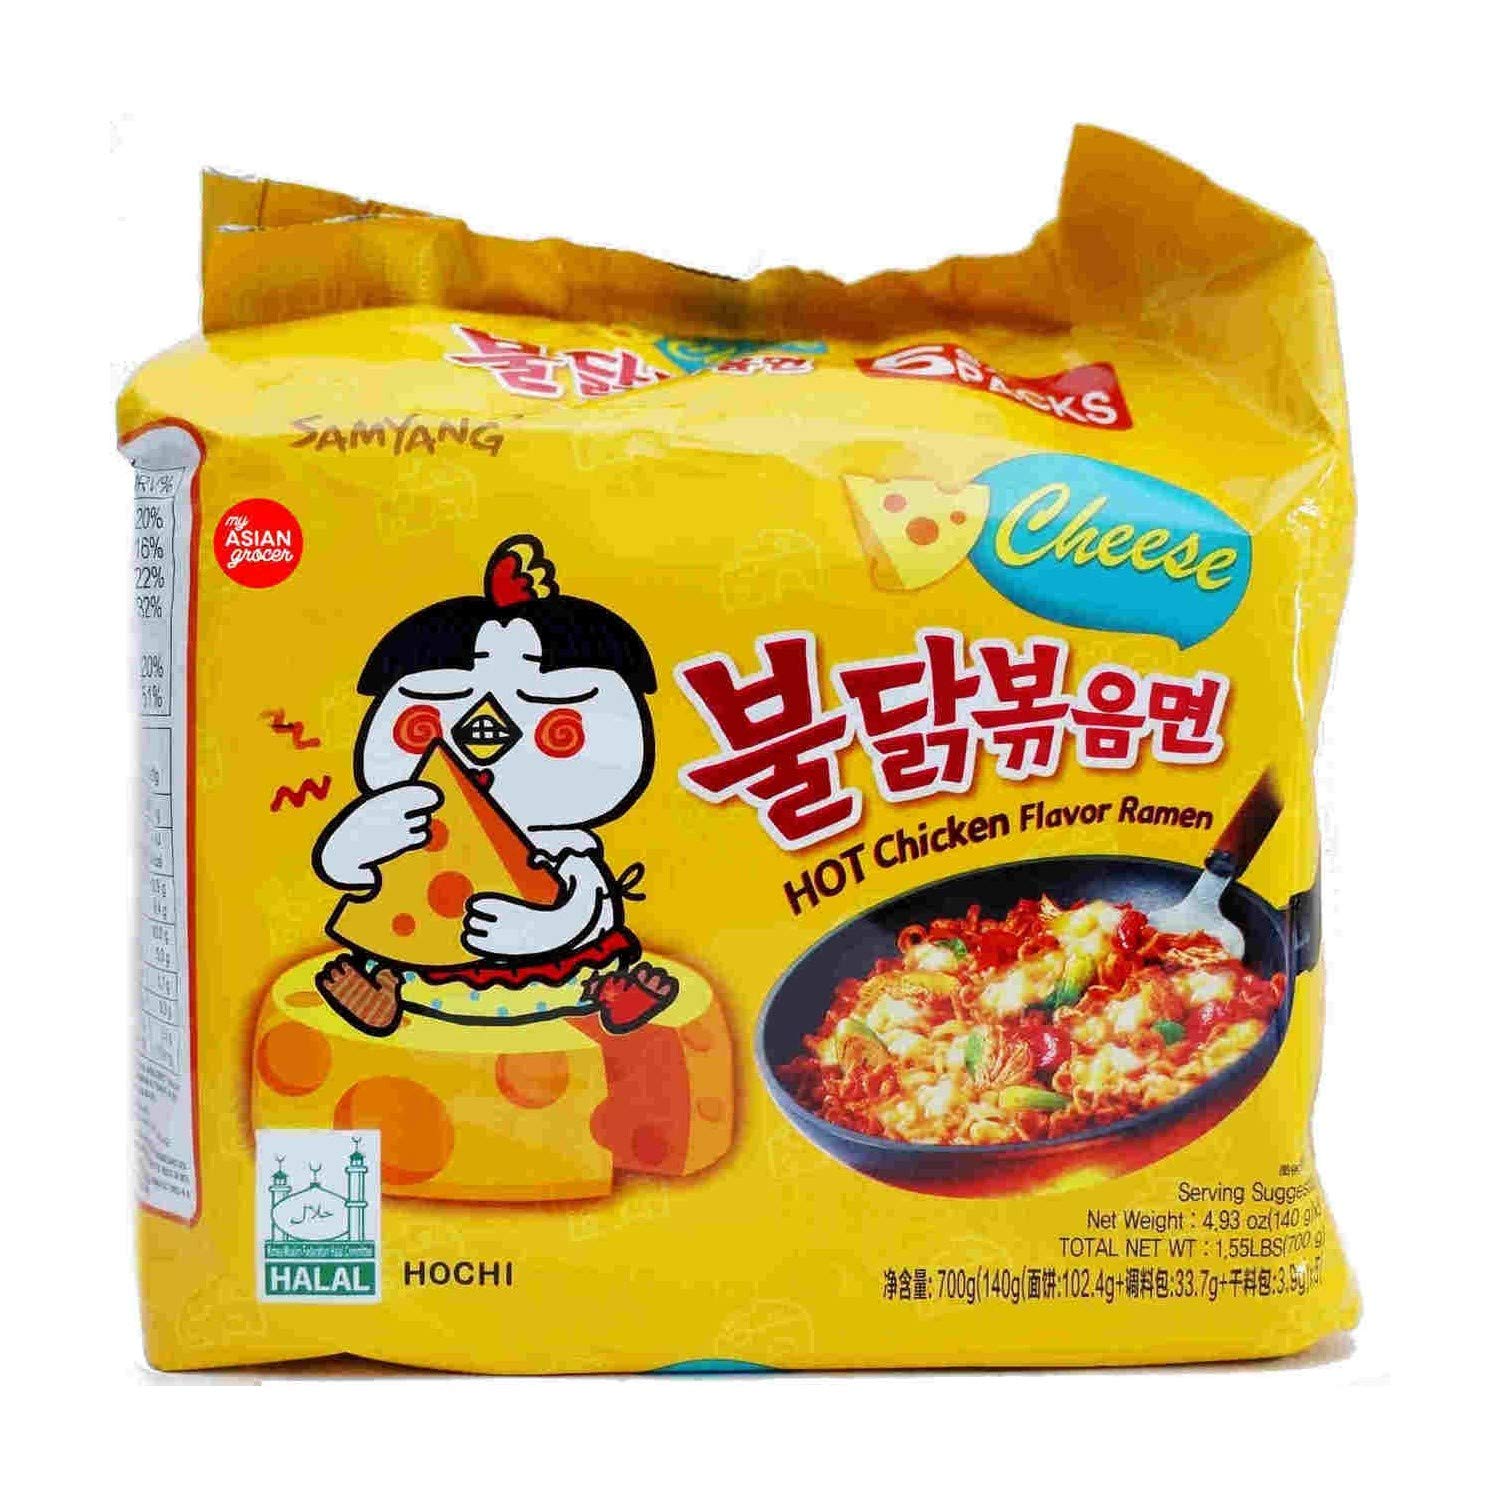 SAMYANG Hot Chicken Noodle - Cheese Ramen 5x 140g